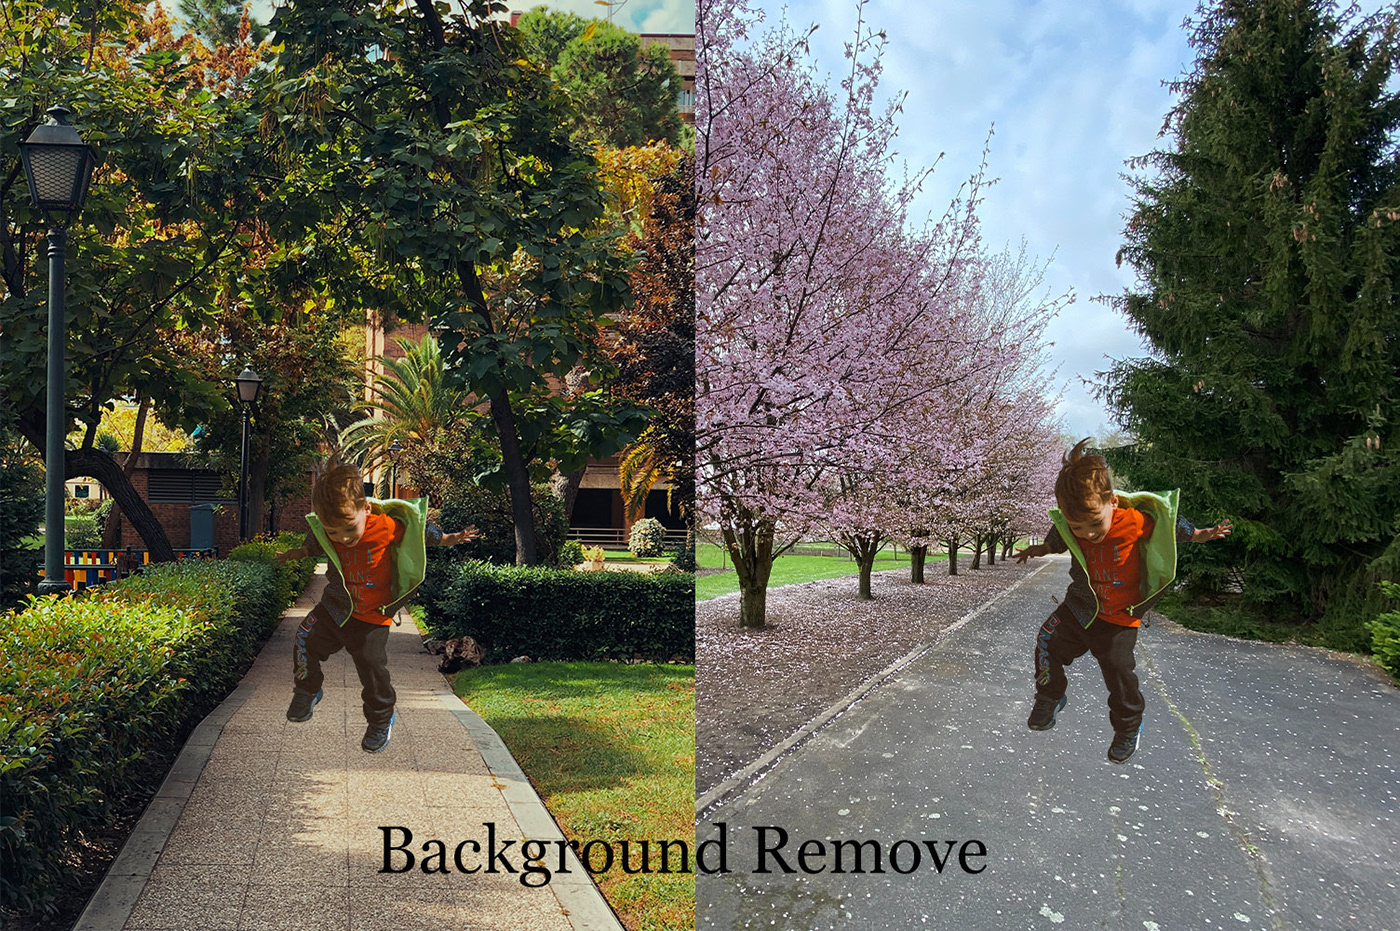 remove background Background Remove Background removal object remove removebackground object removal cutout remove object